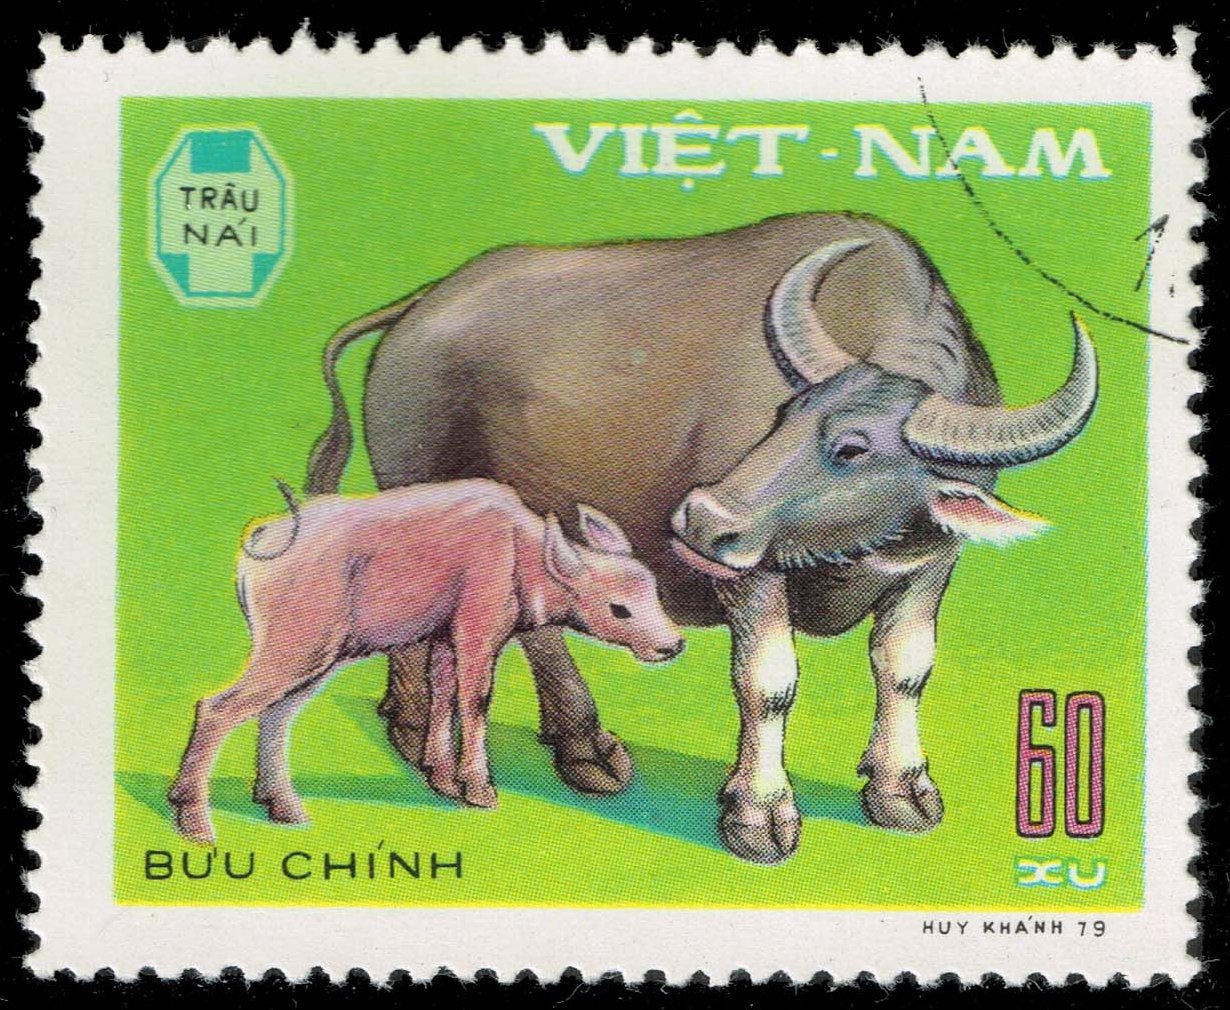 Viet Nam (North) #991 Water Buffalo with Calf; CTO